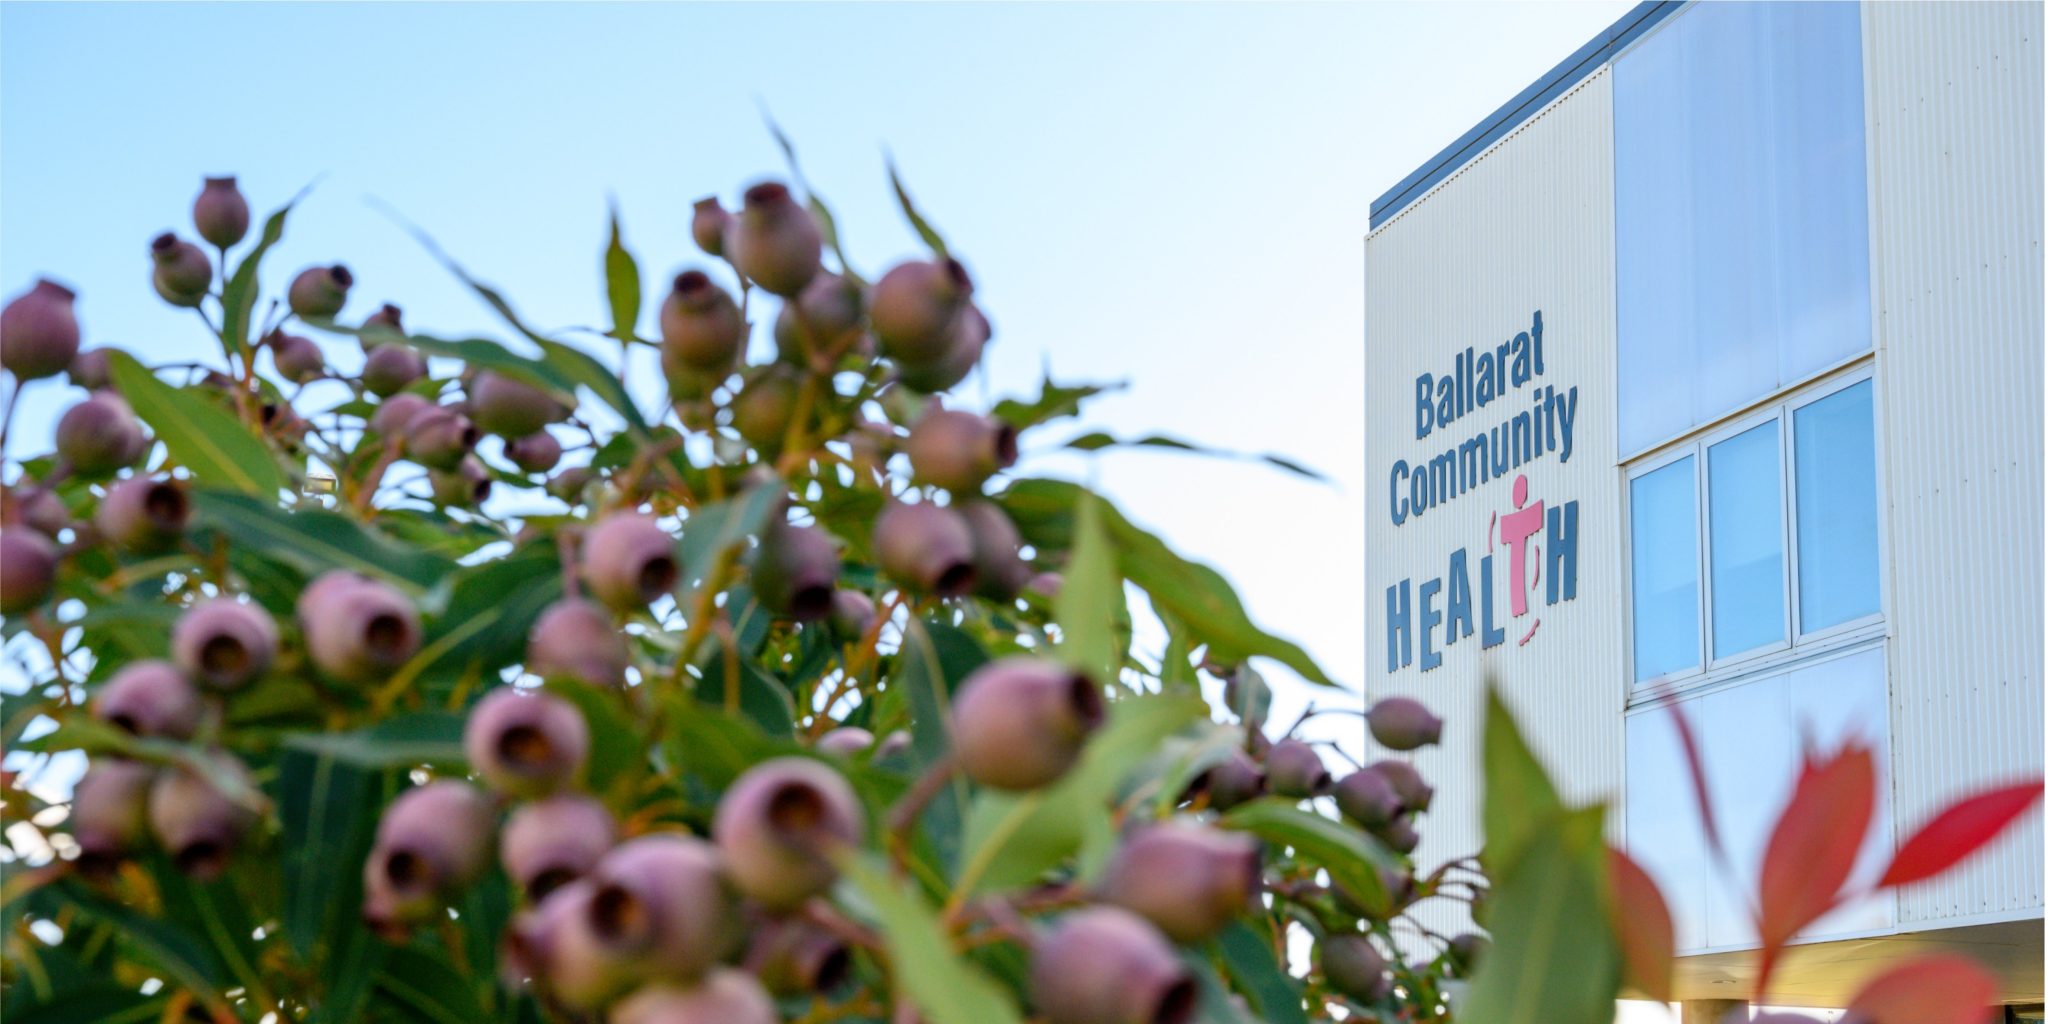 Ballarat Community Health